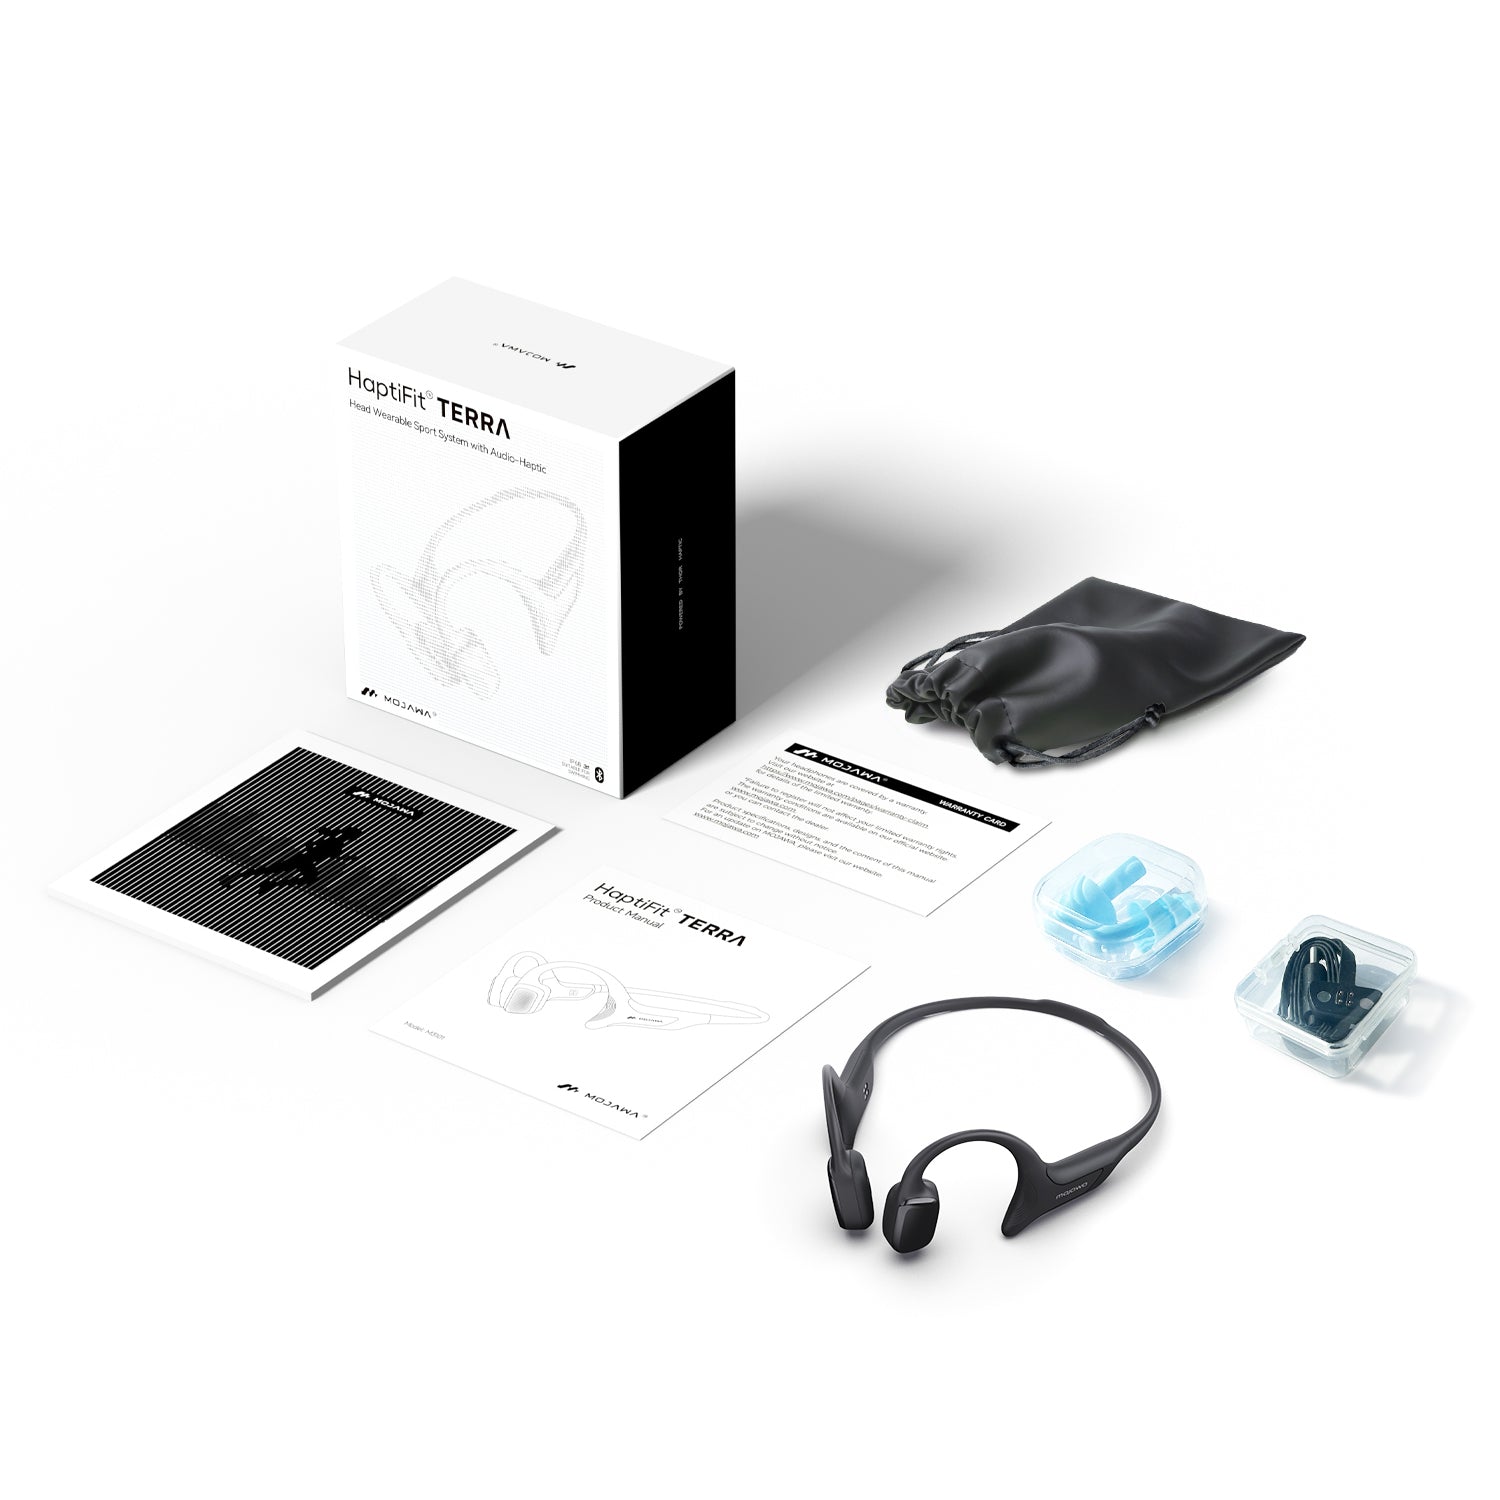 Mojawa-hapitfit-terra-bone-conduction-headphones-Packaging-Inventory